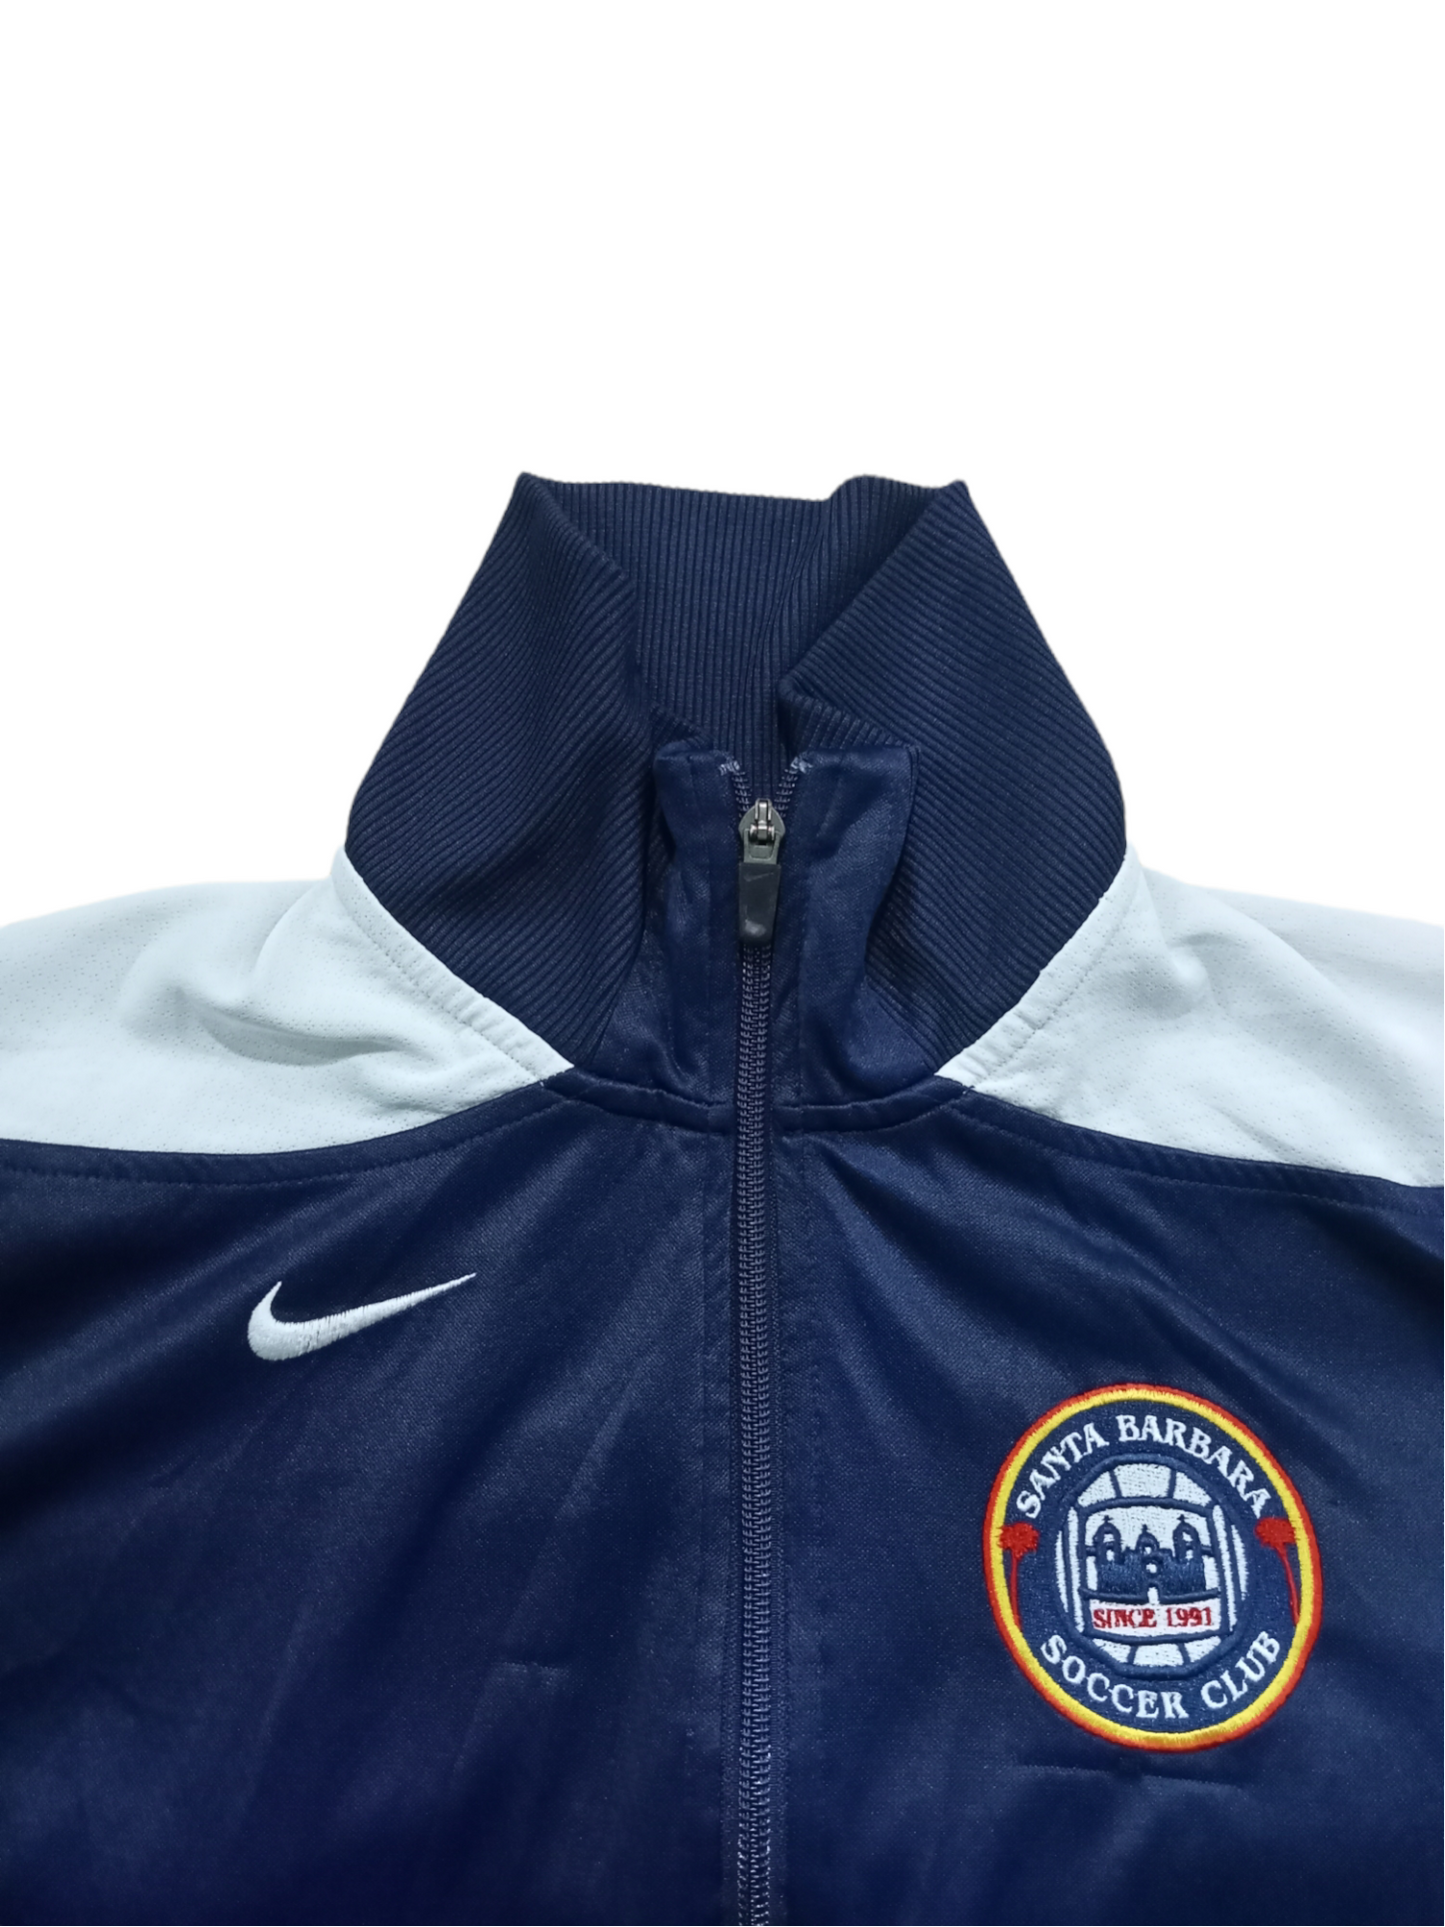 Jacket Nike Santa Barbara Soccer Club – ECO5 Online Store